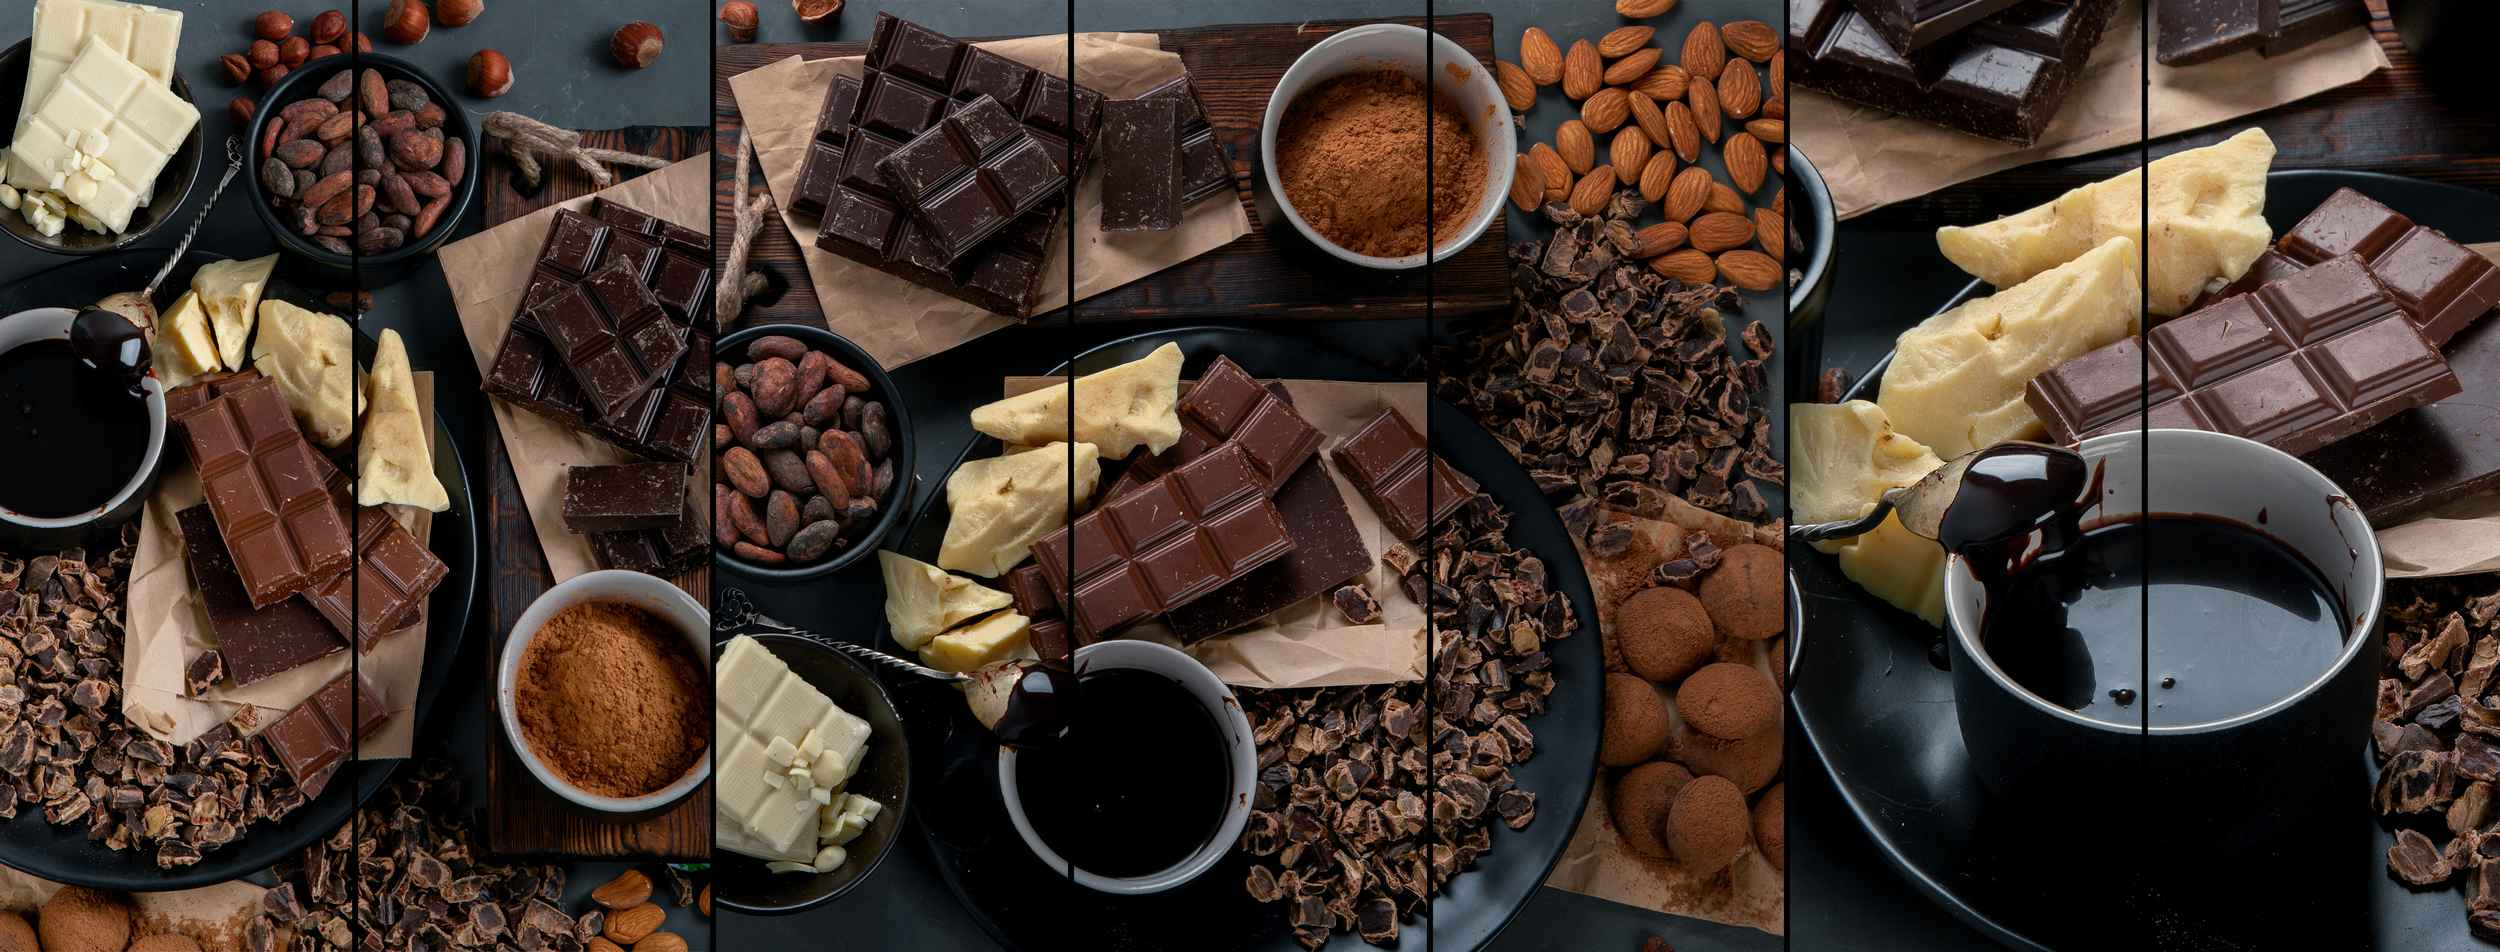 Sacramento Vending Service | Mini Markets Chocolate | Coffee Service